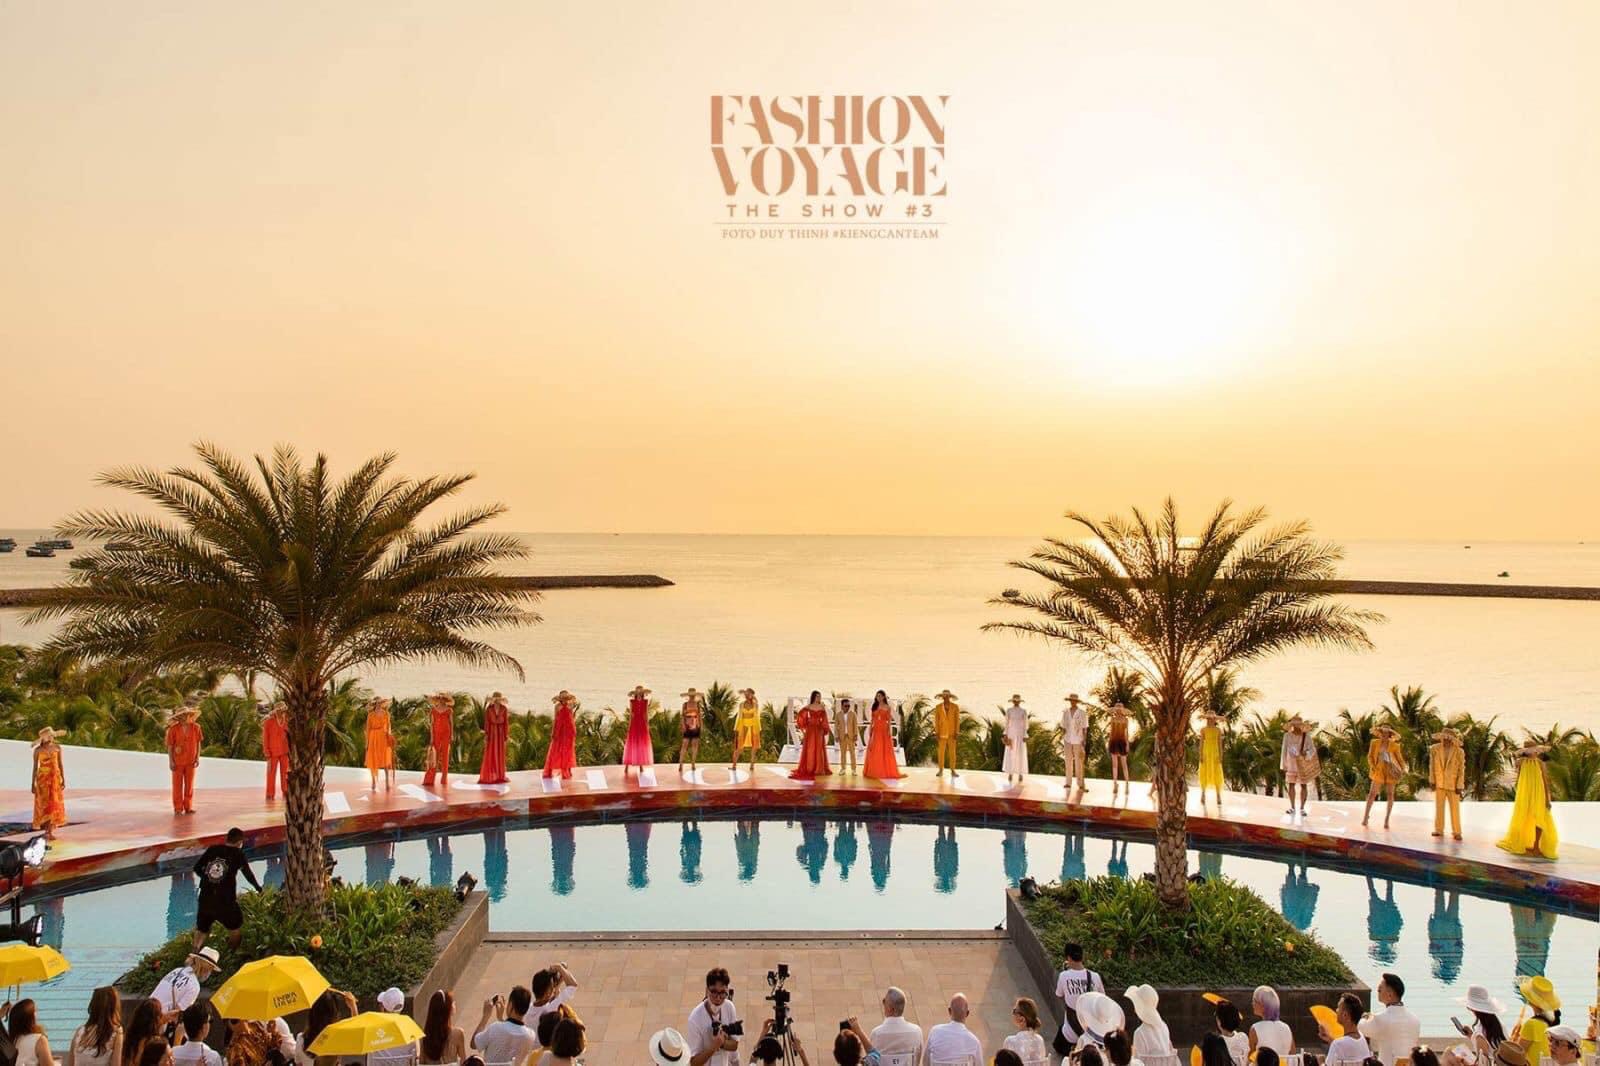 Fashion Voyage #5 sắp diễn ra tại đảo ngọc Phú Quốc